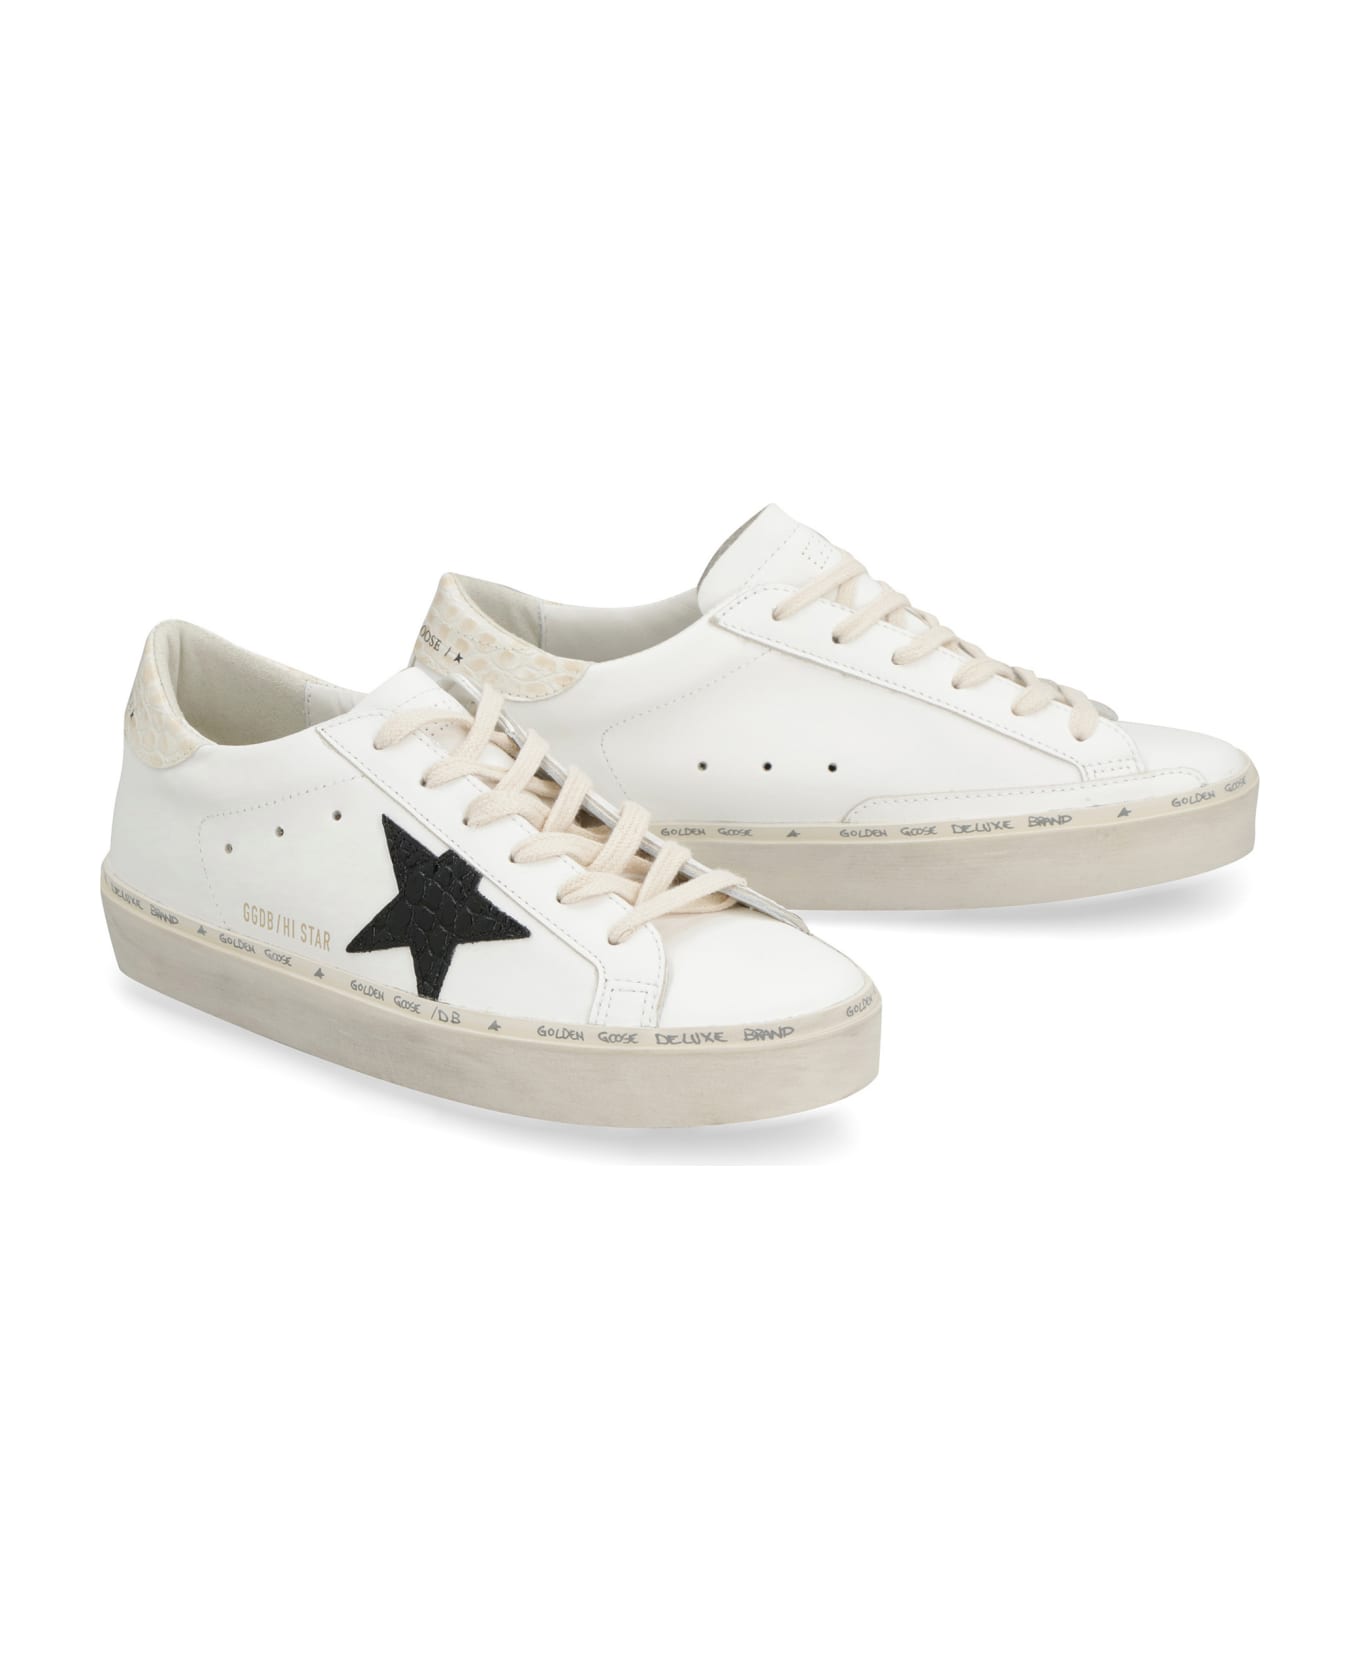 Golden Goose Hi Star Leather Platform Sneakers - White